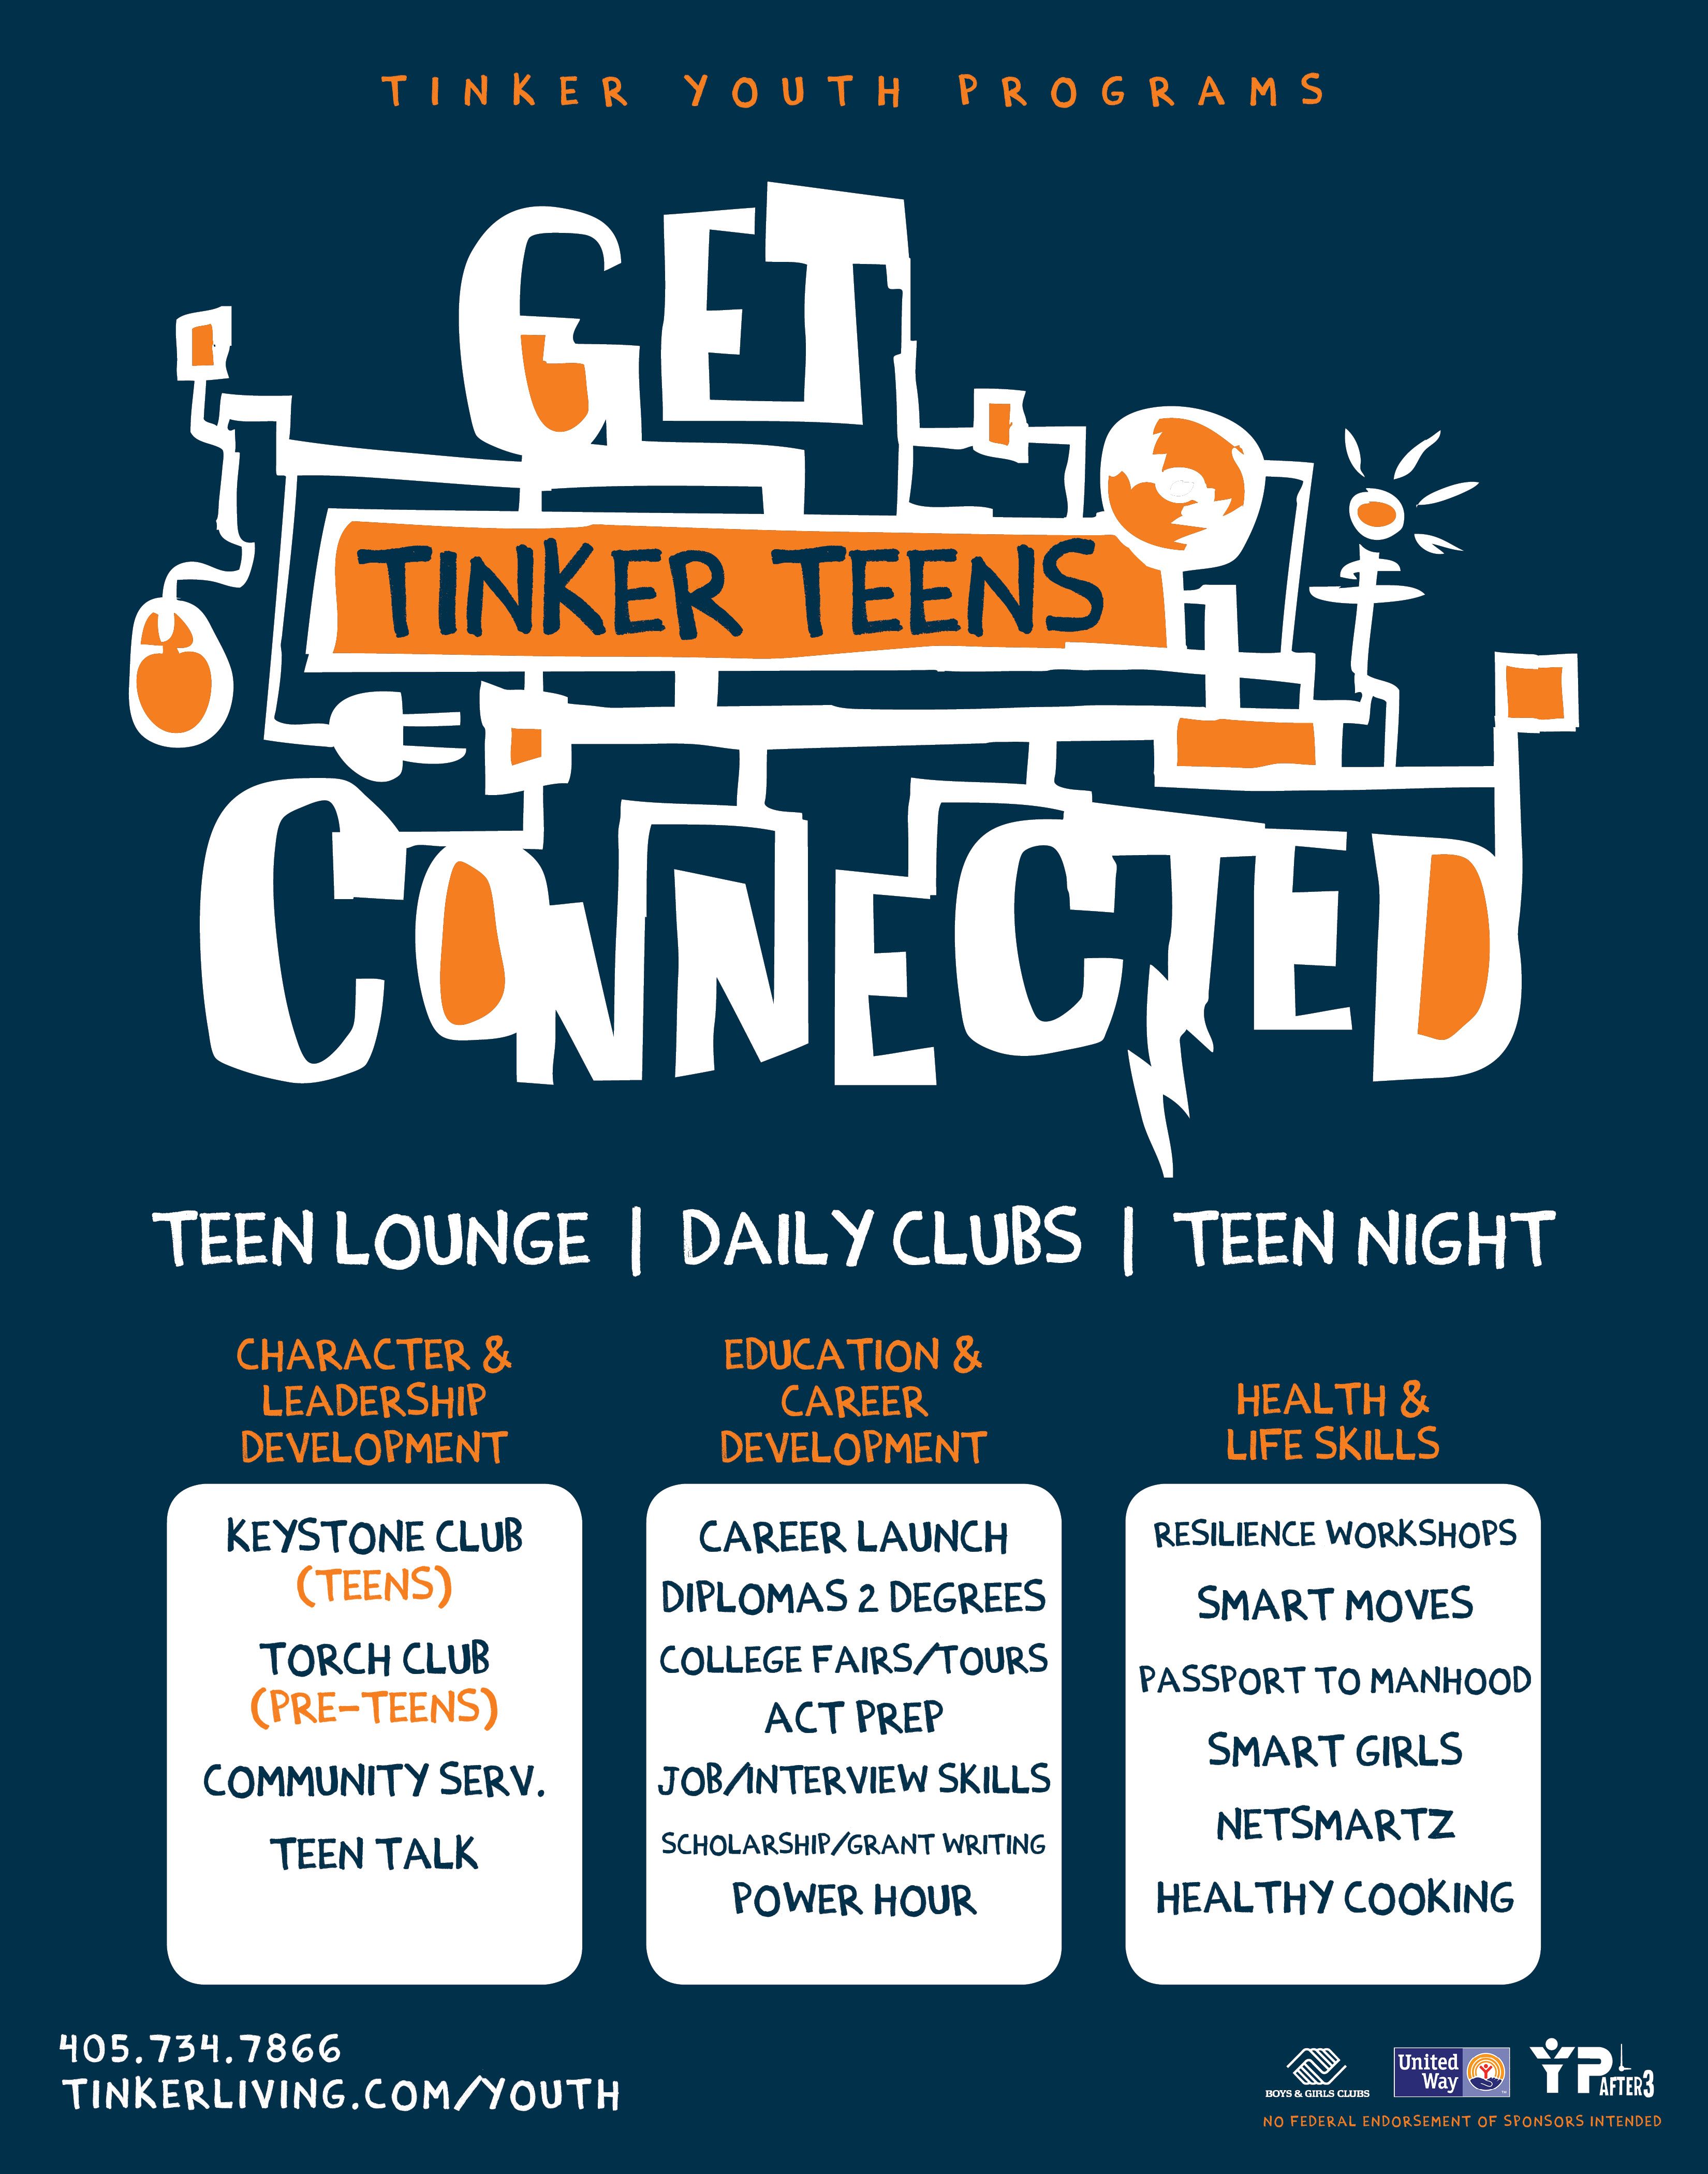 Internet teen center Welcome to the Teen Center